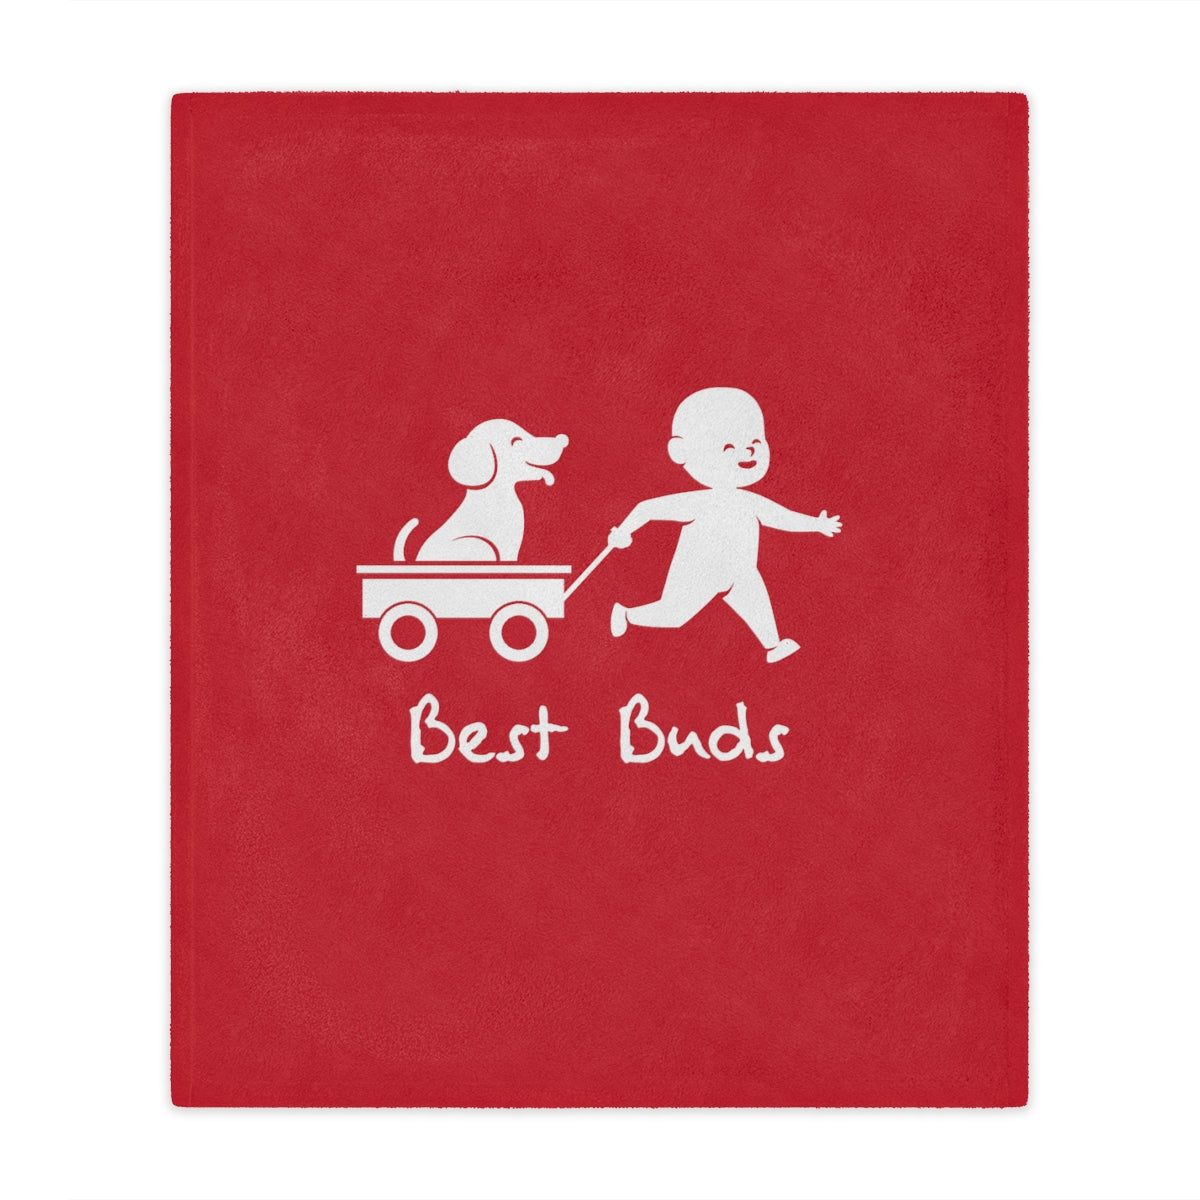 Best Buds Minky Blanket - Red